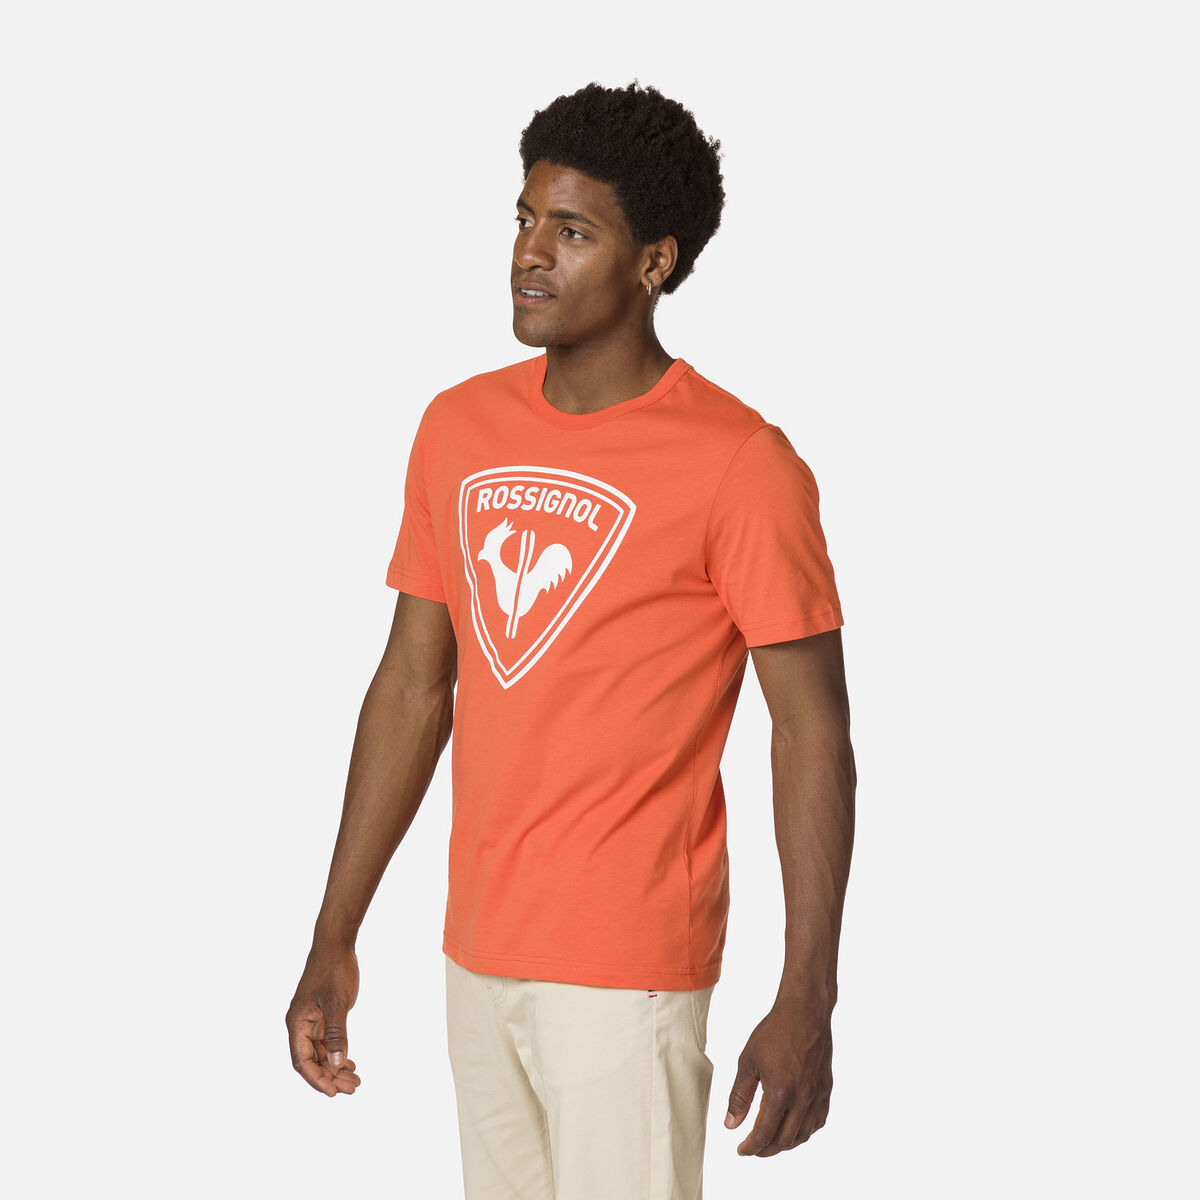 Rossignol Men's logo tee Orange